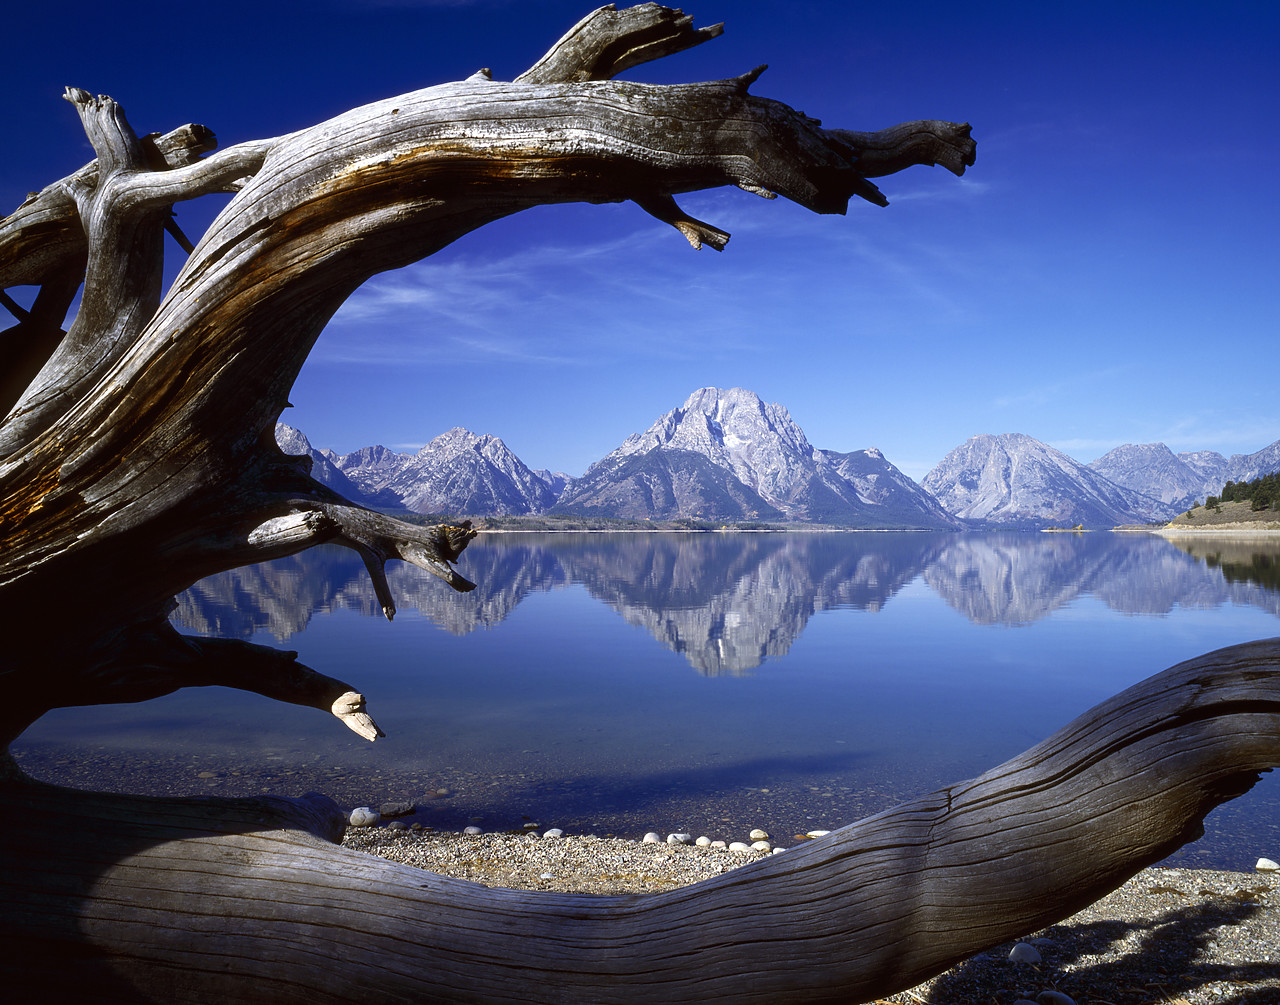 #913720-1 - Grand Tetons Reflecting in Jackson Lake, Grand Tetons National Park, Wyoming, USA